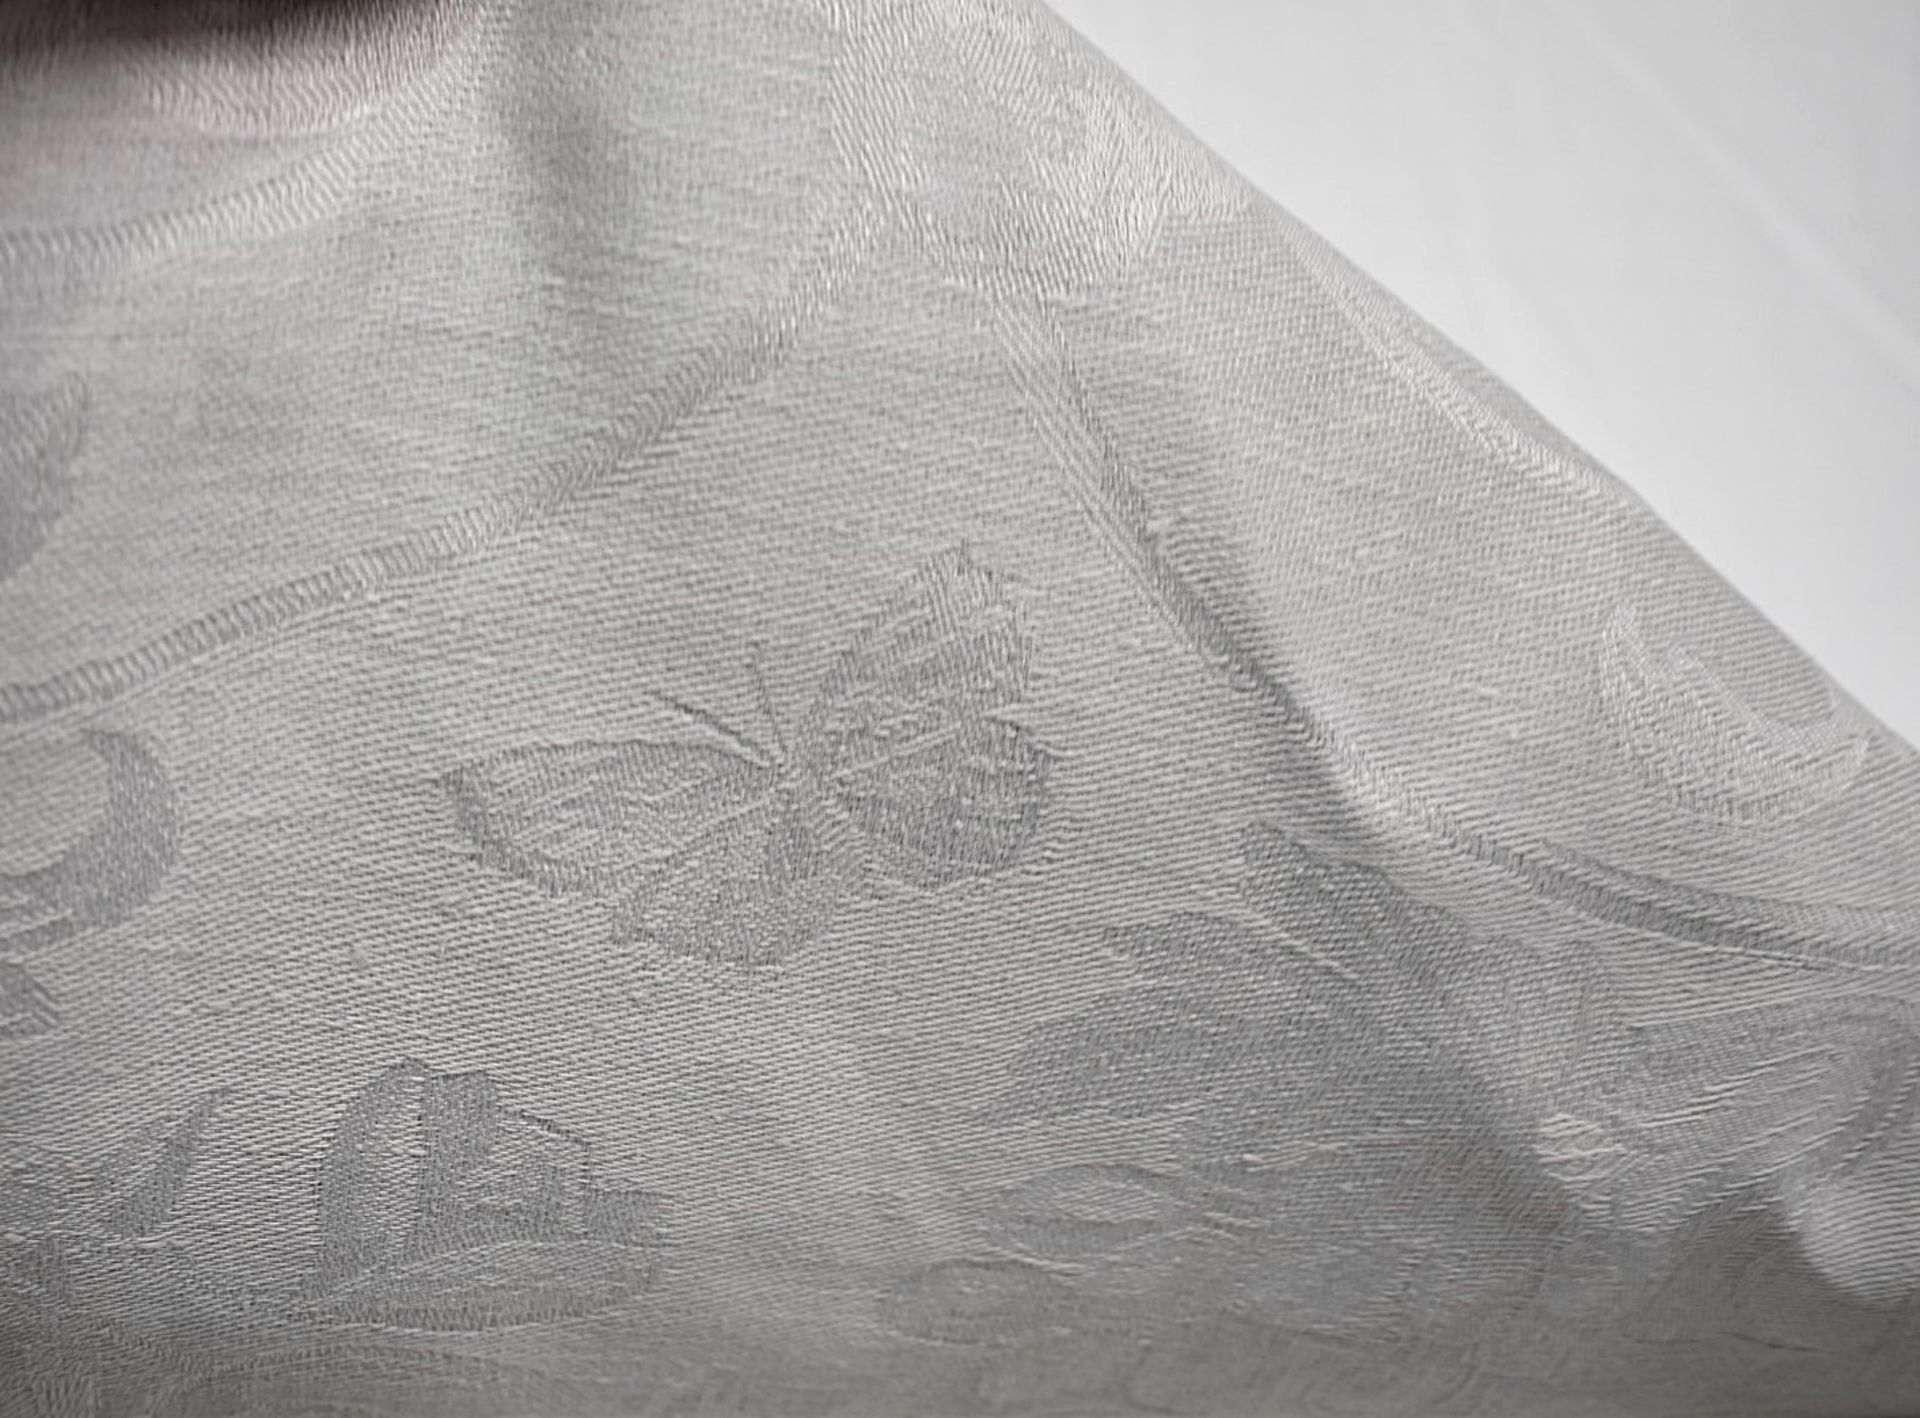 1 x LE JACQUARD FRANÇAIS 'Tivoli' Luxury Linen Tablecloth Ø240cm - Original Price £385.00 - Image 7 of 8